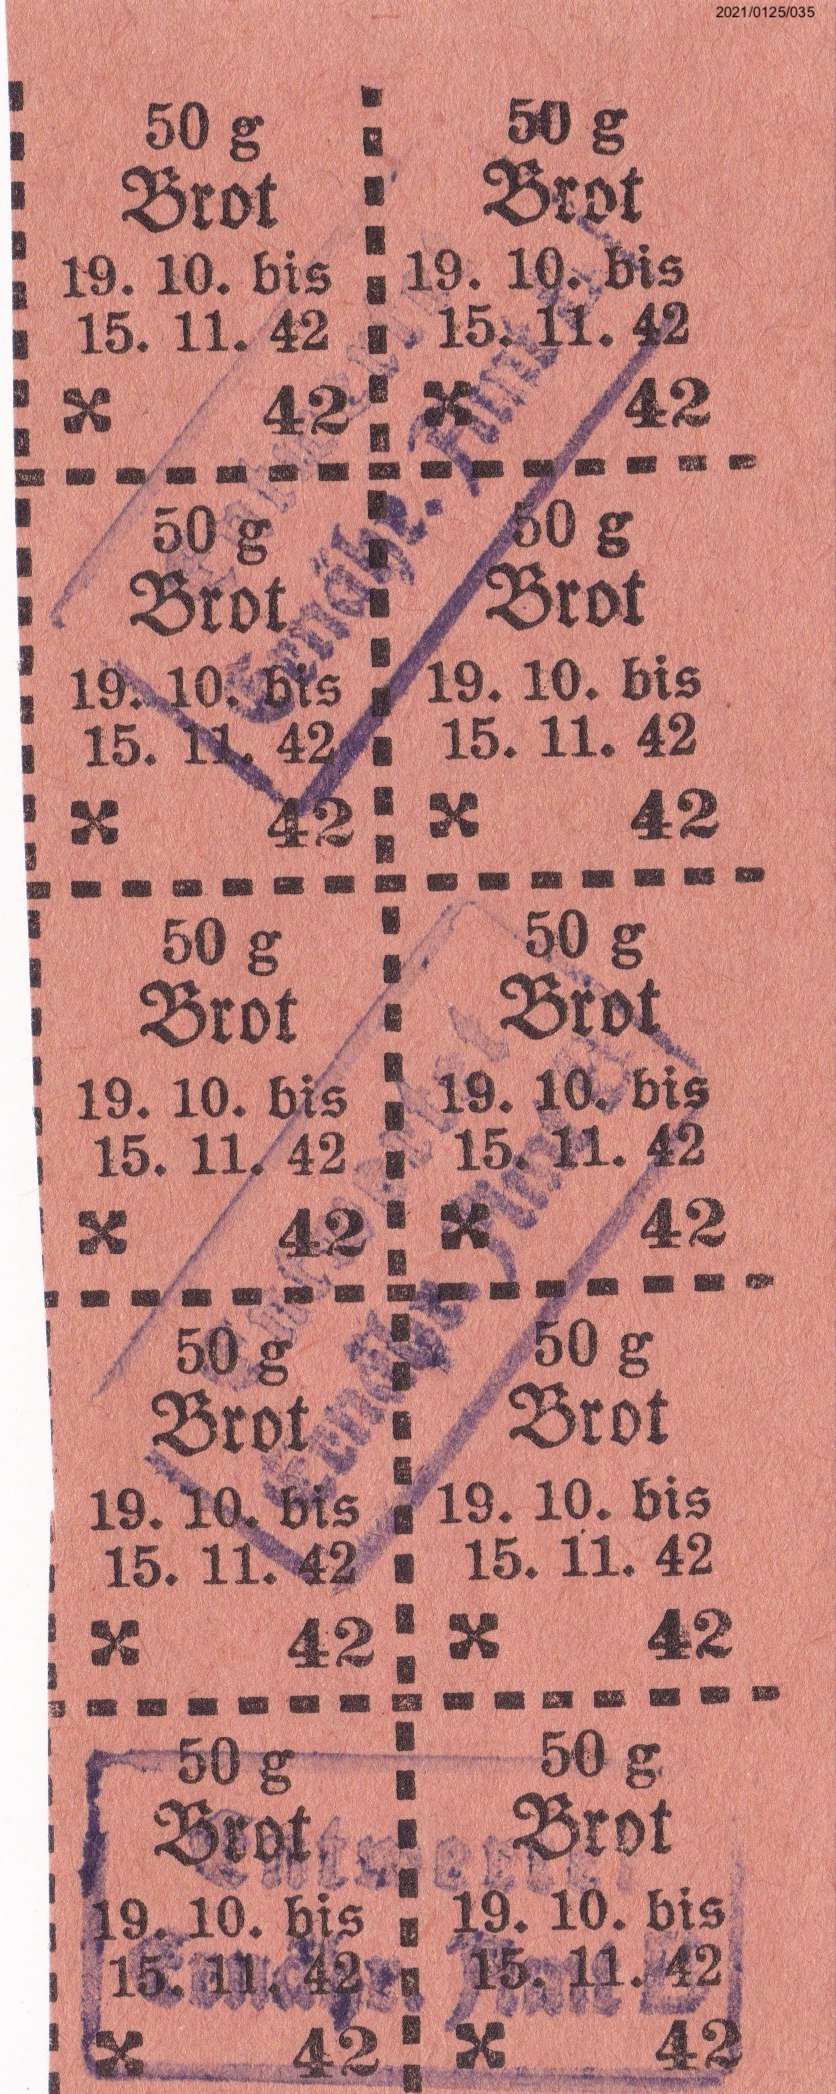 Lebensmittelmarken für 50g Brot 1942, entwertet (Museumsgesellschaft Bad Dürkheim e. V. CC BY-NC-SA)